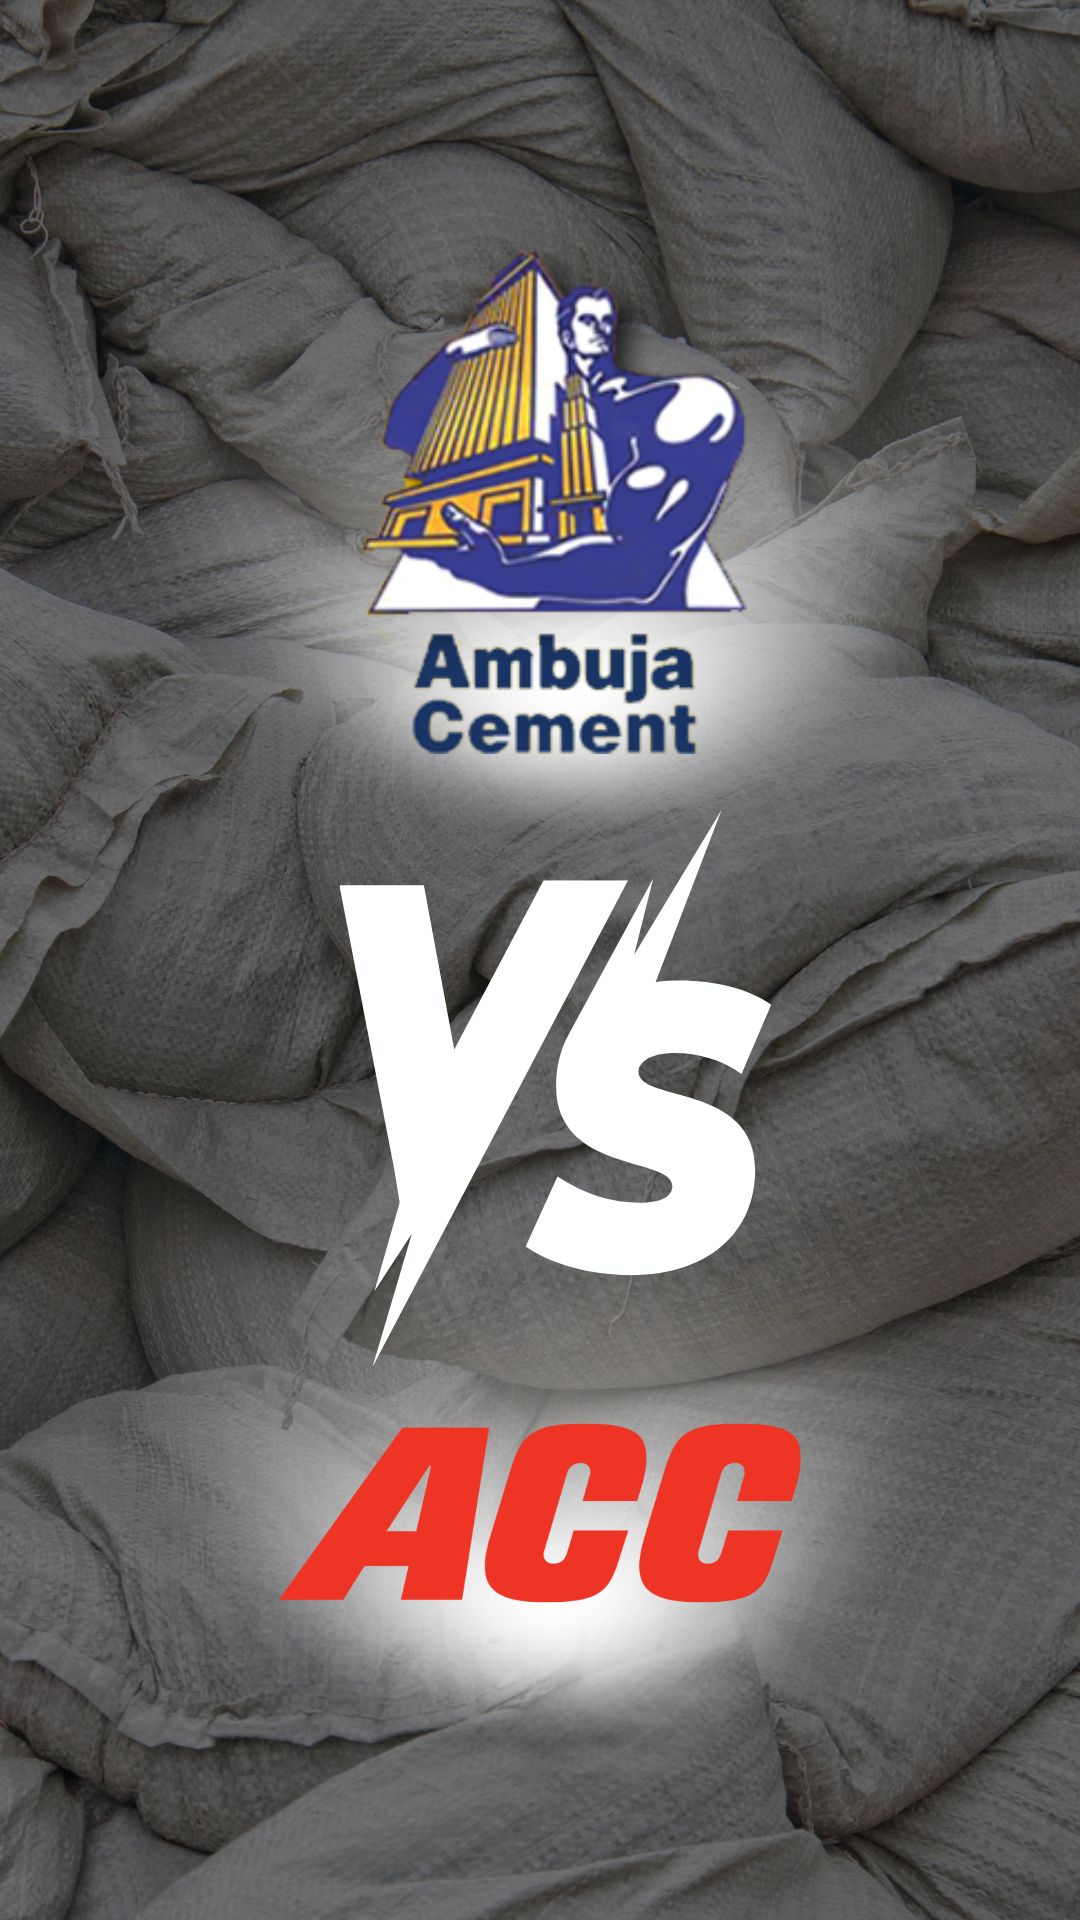 ACC Super Shaktimaan Cement - ACC Cement Range